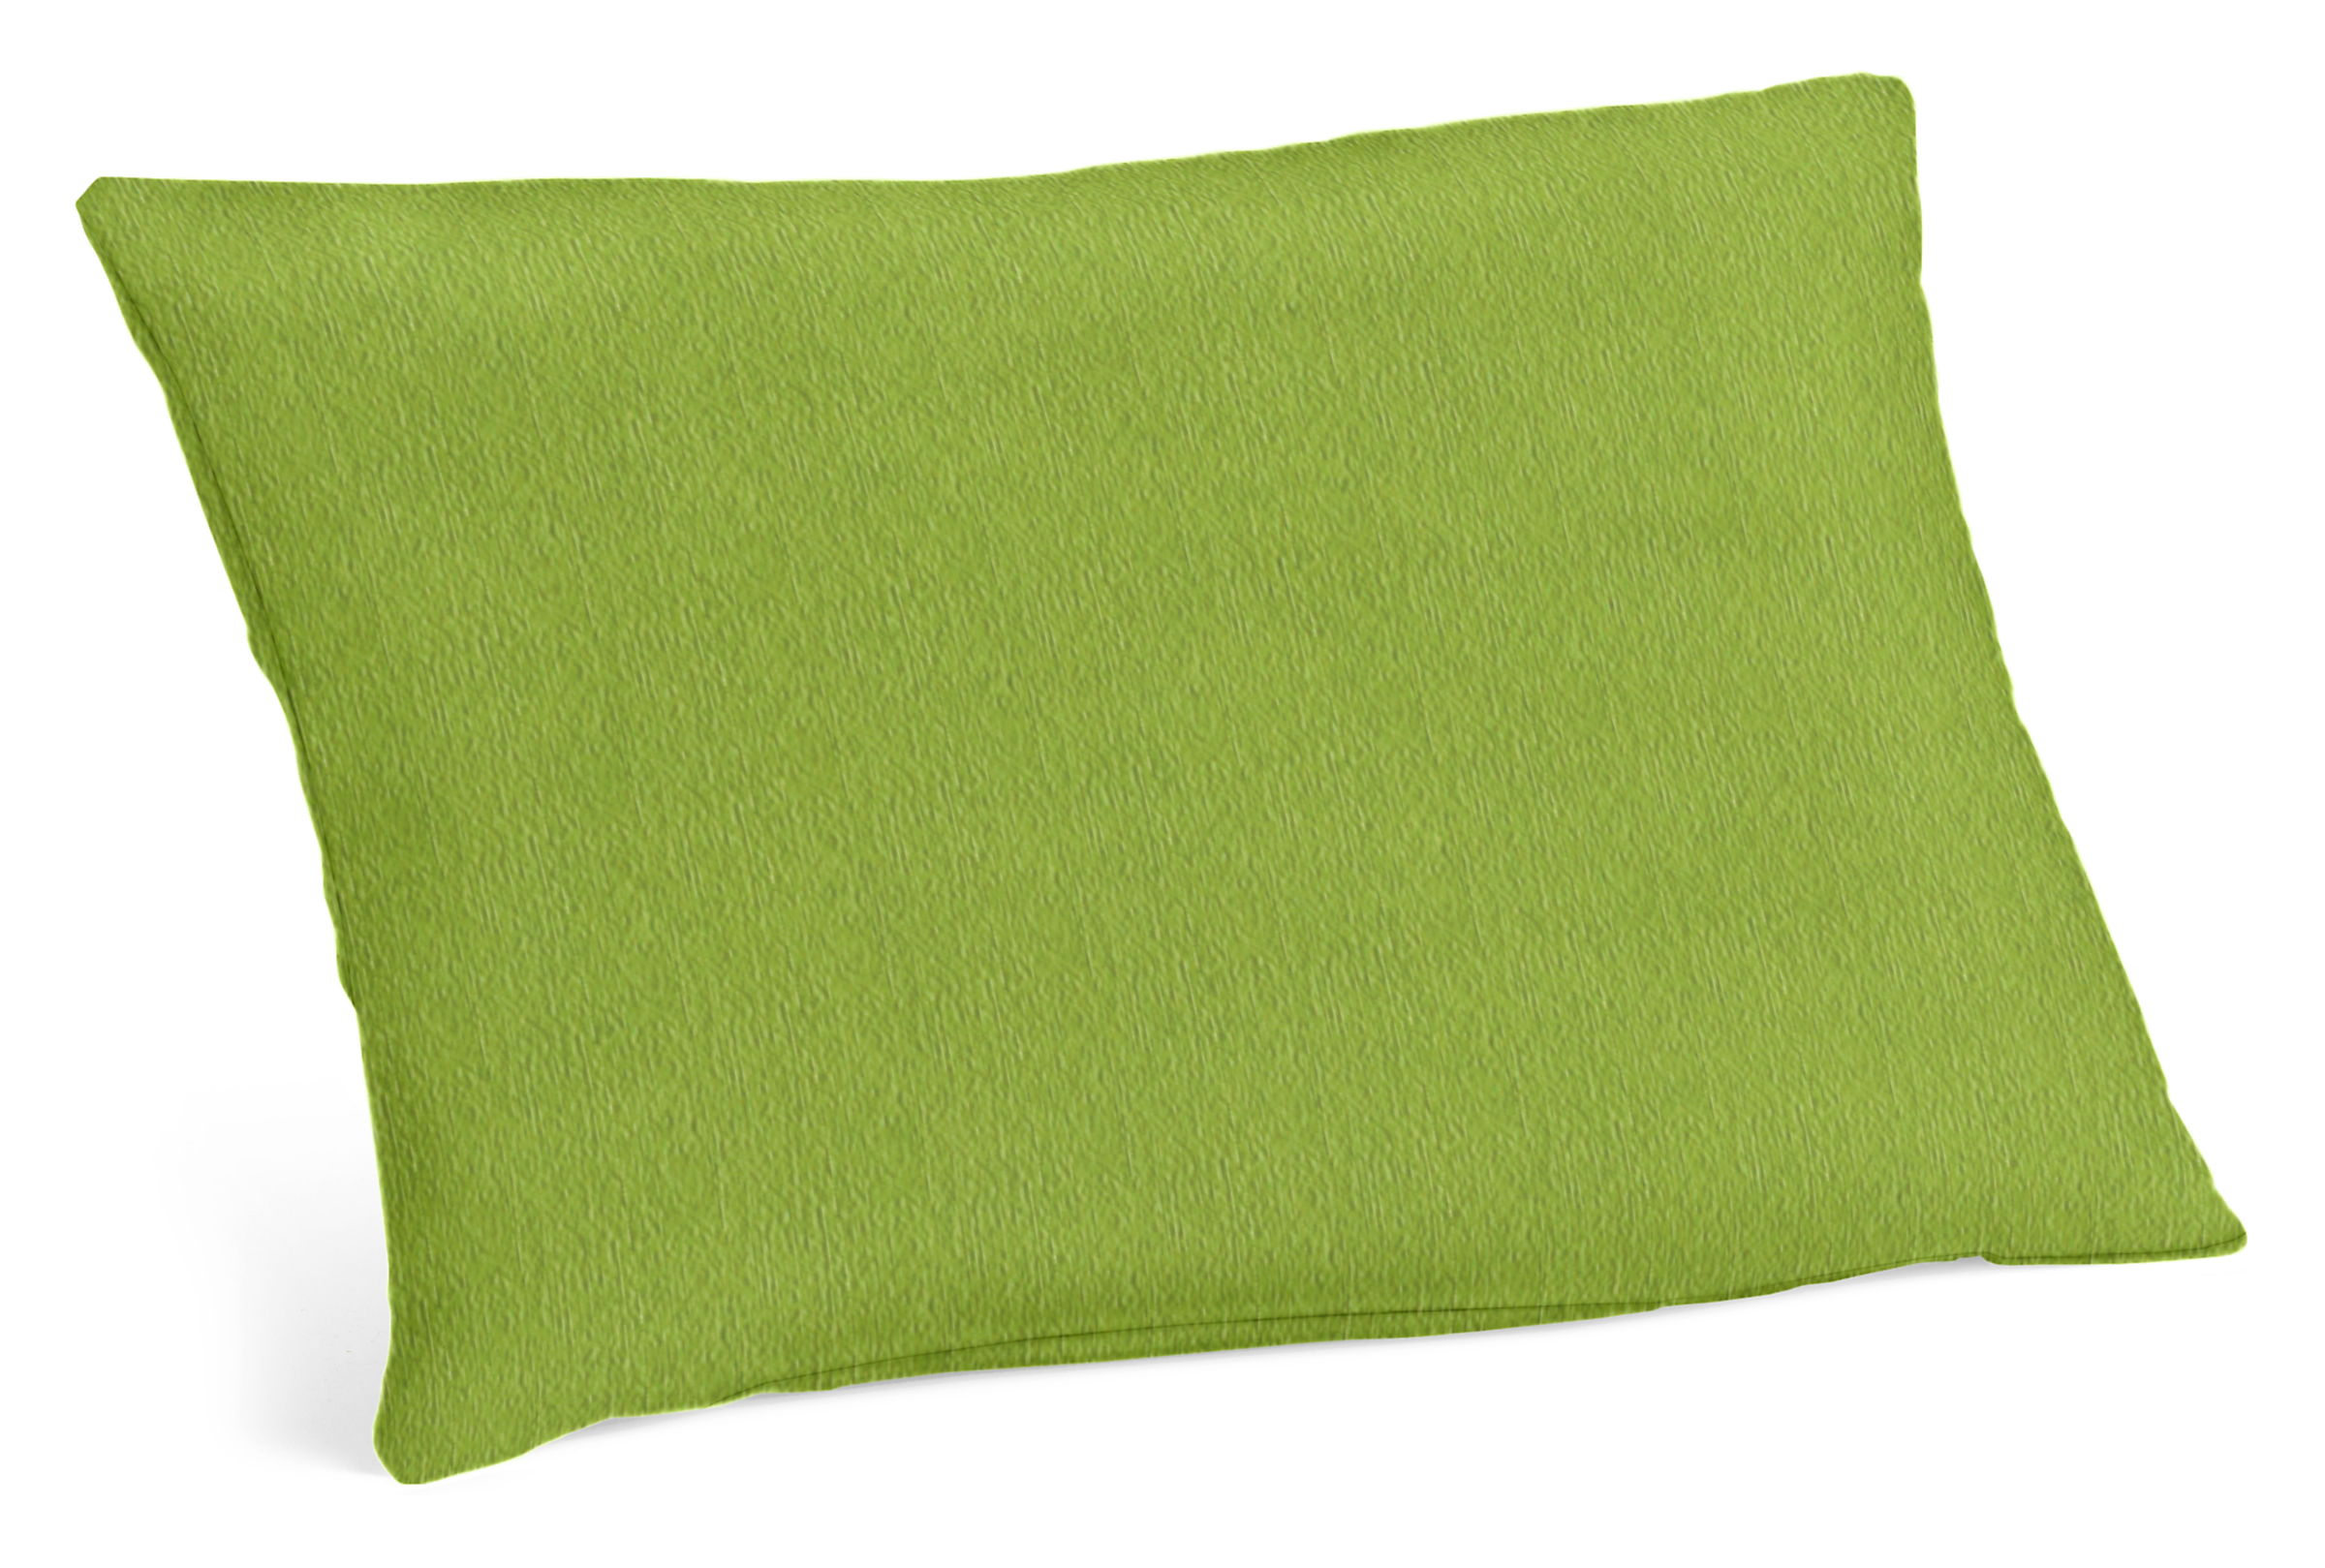 Hue 20w 13h Outdoor Pillow in Sunbrella Canvas Green